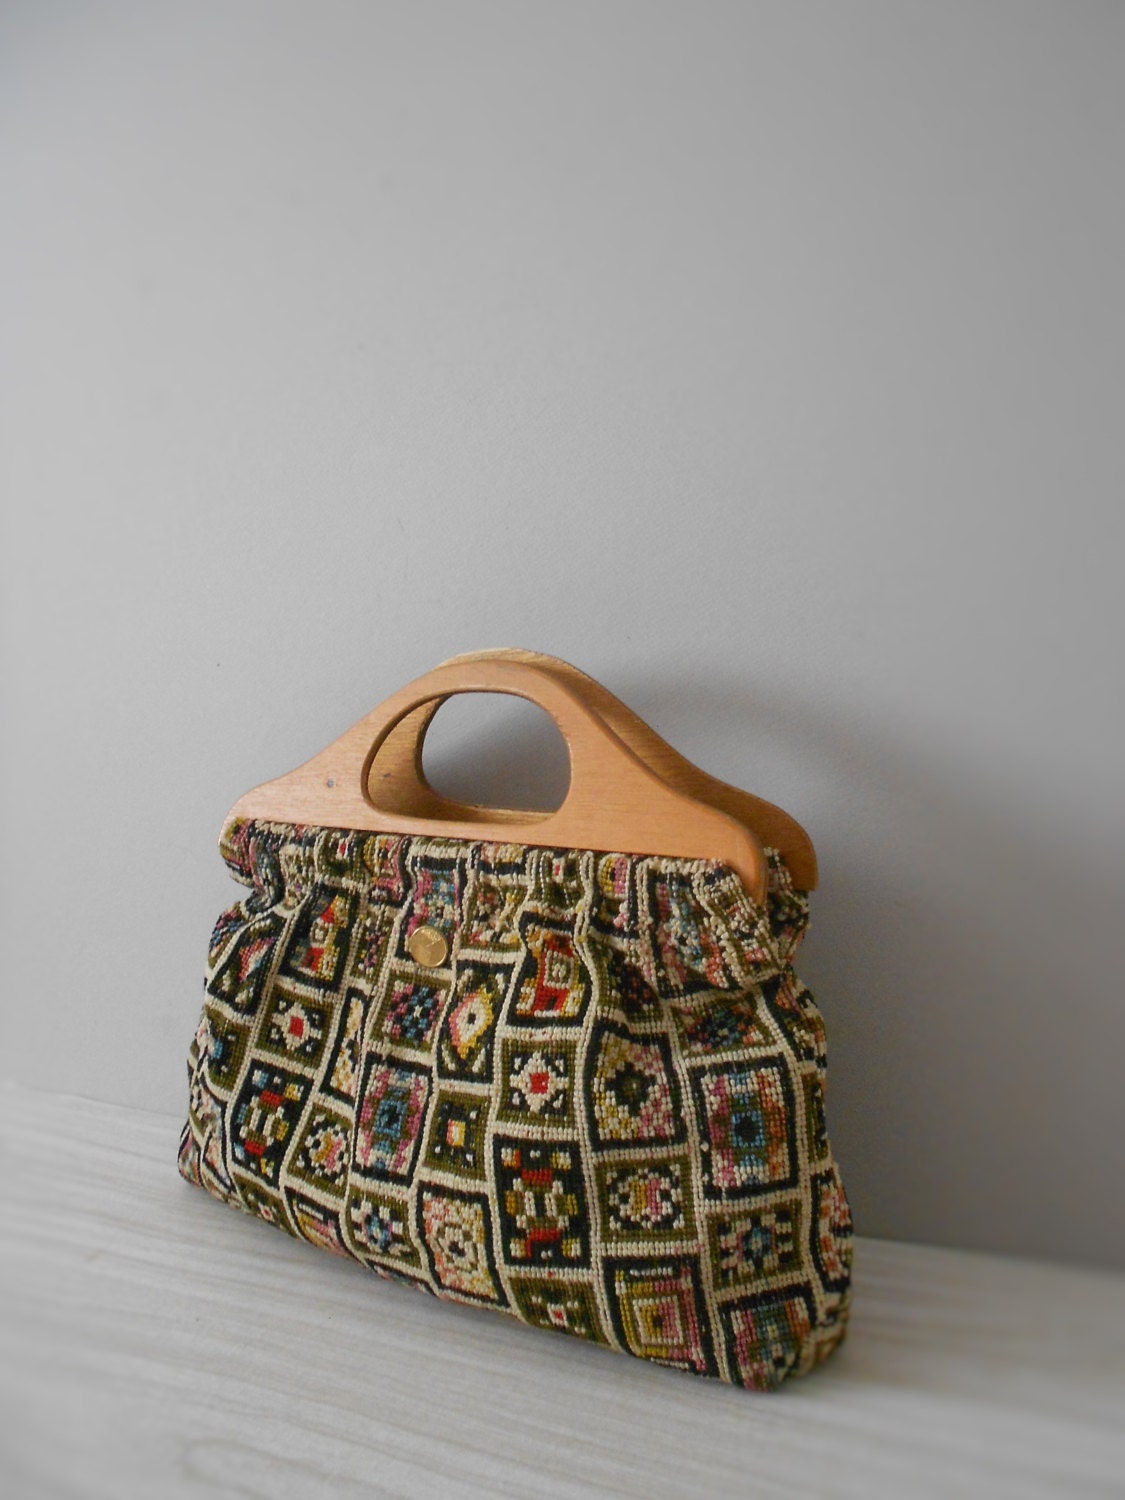 woven brown textile carpet handbag / purse / wooden handle